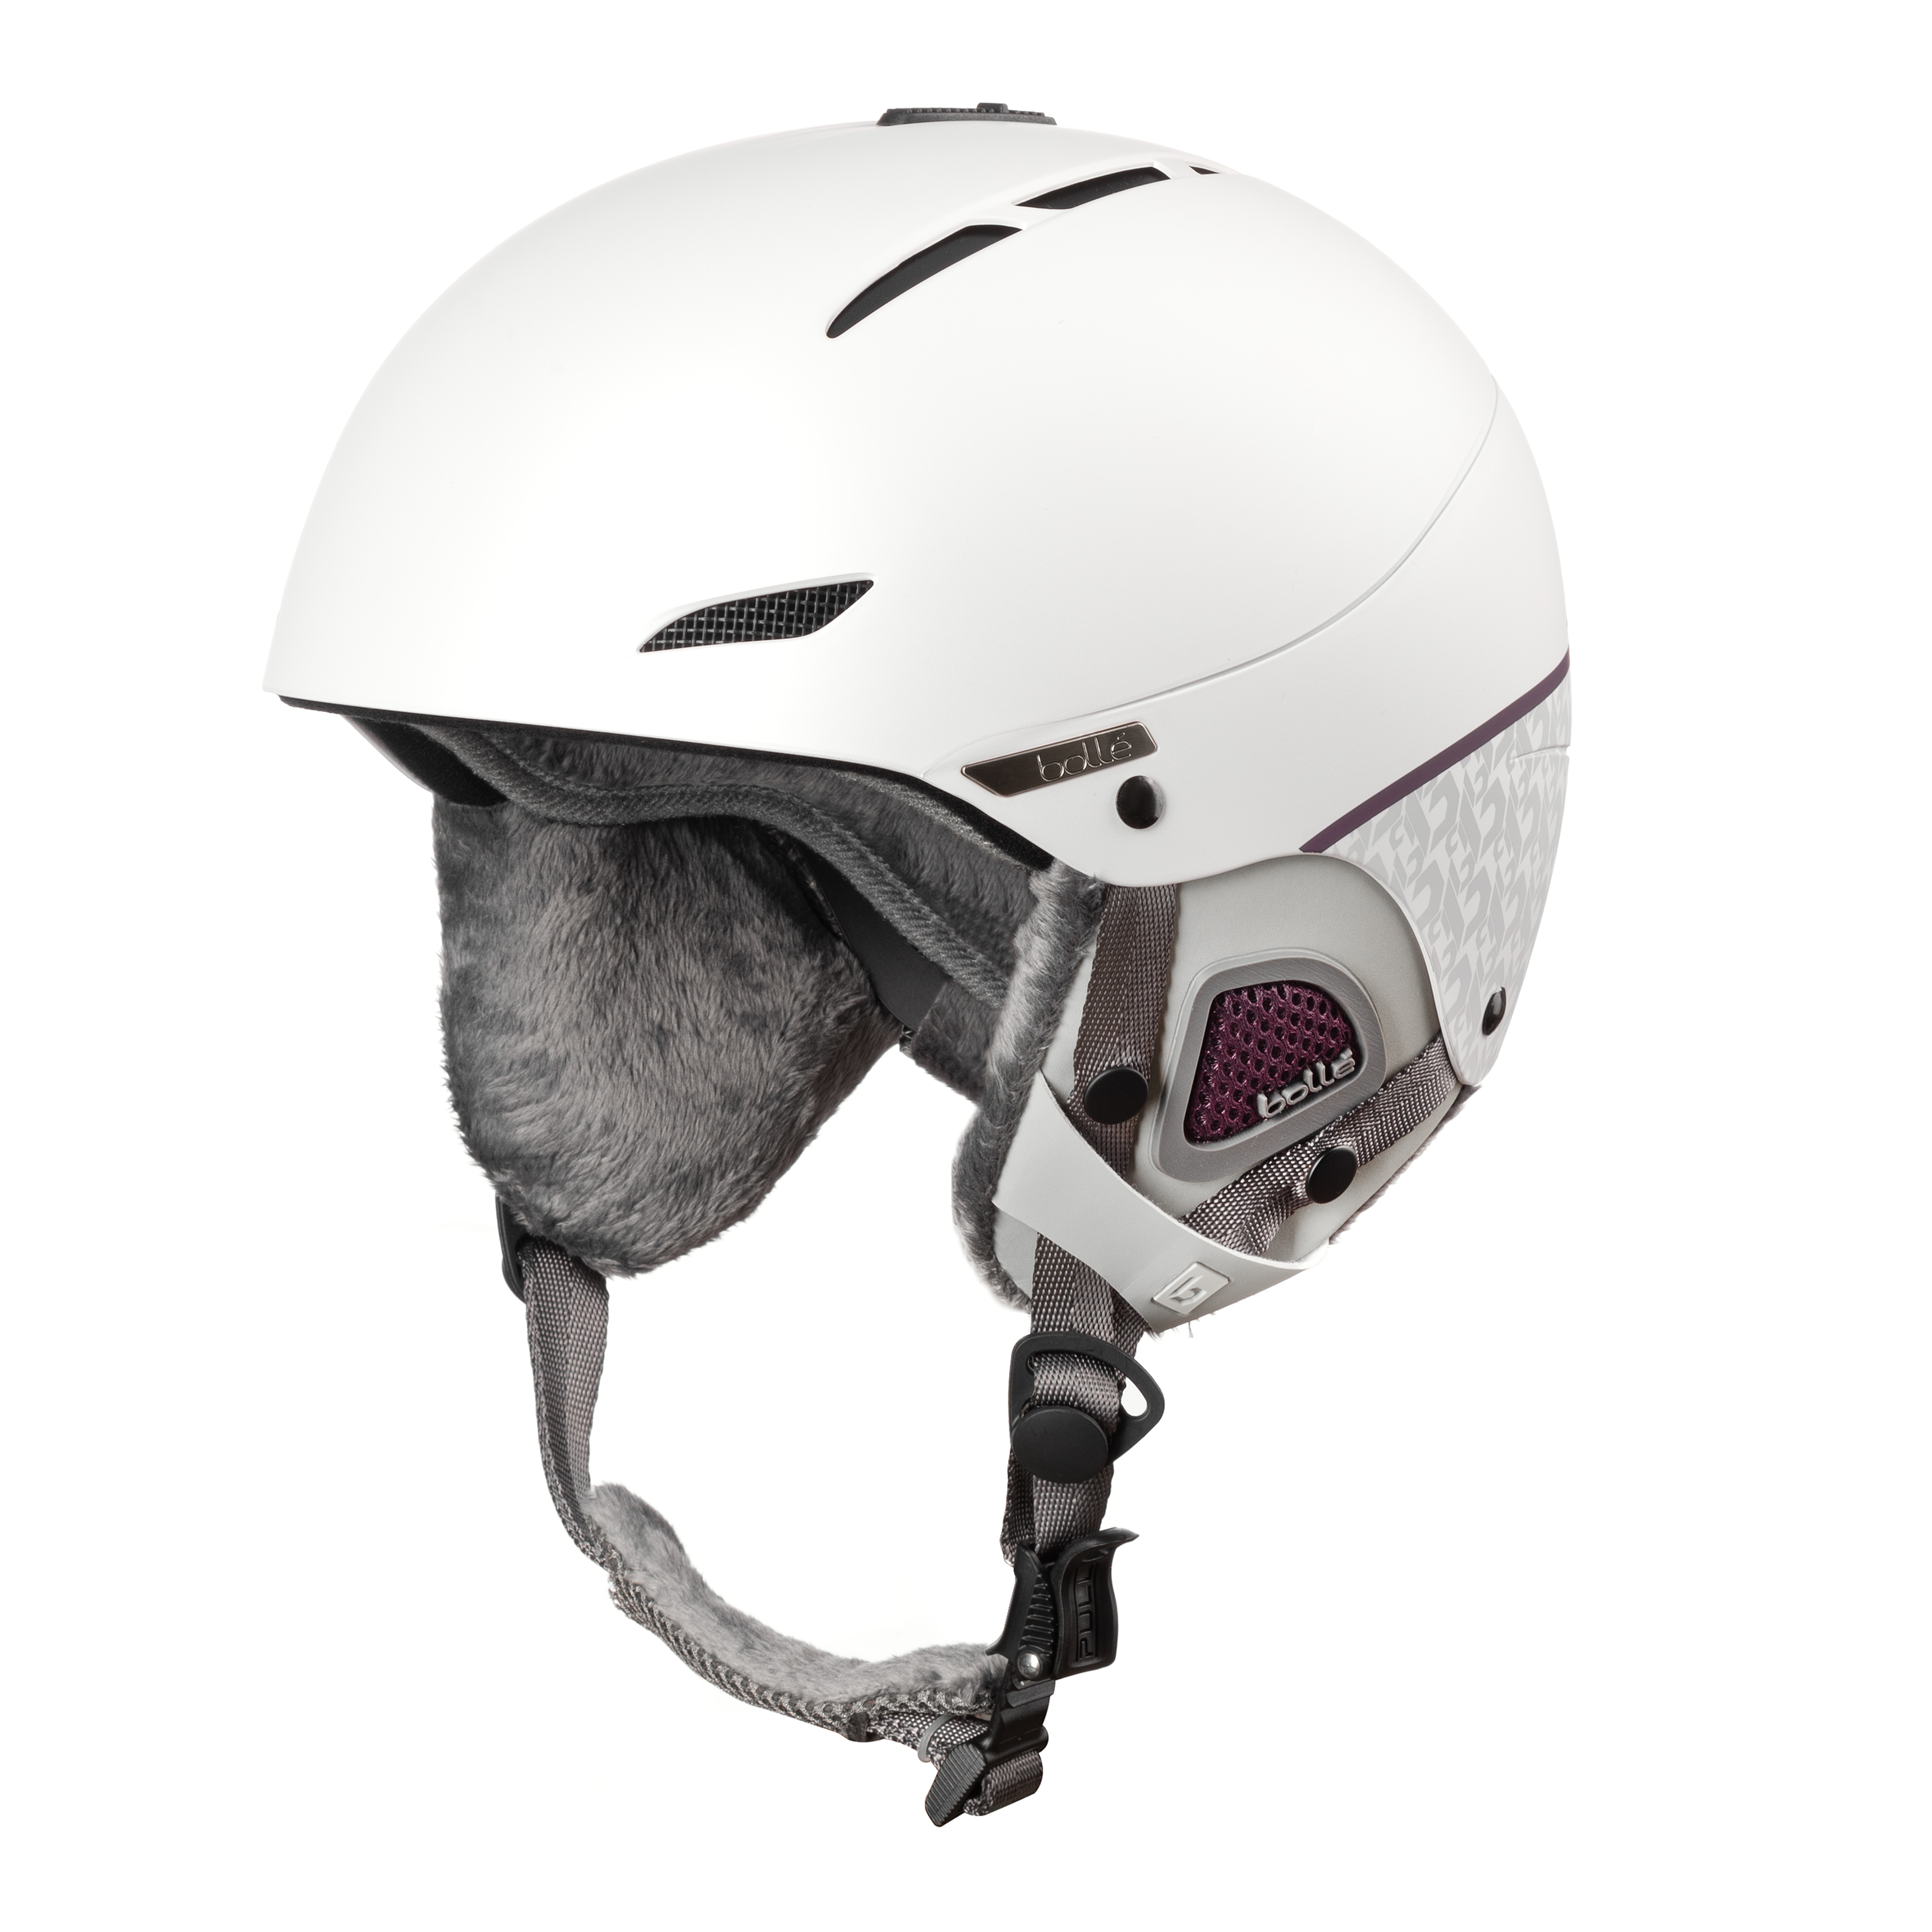 Цена шлем для сноубординга Bolle JULIET White Pearl Matte (M) в Киеве